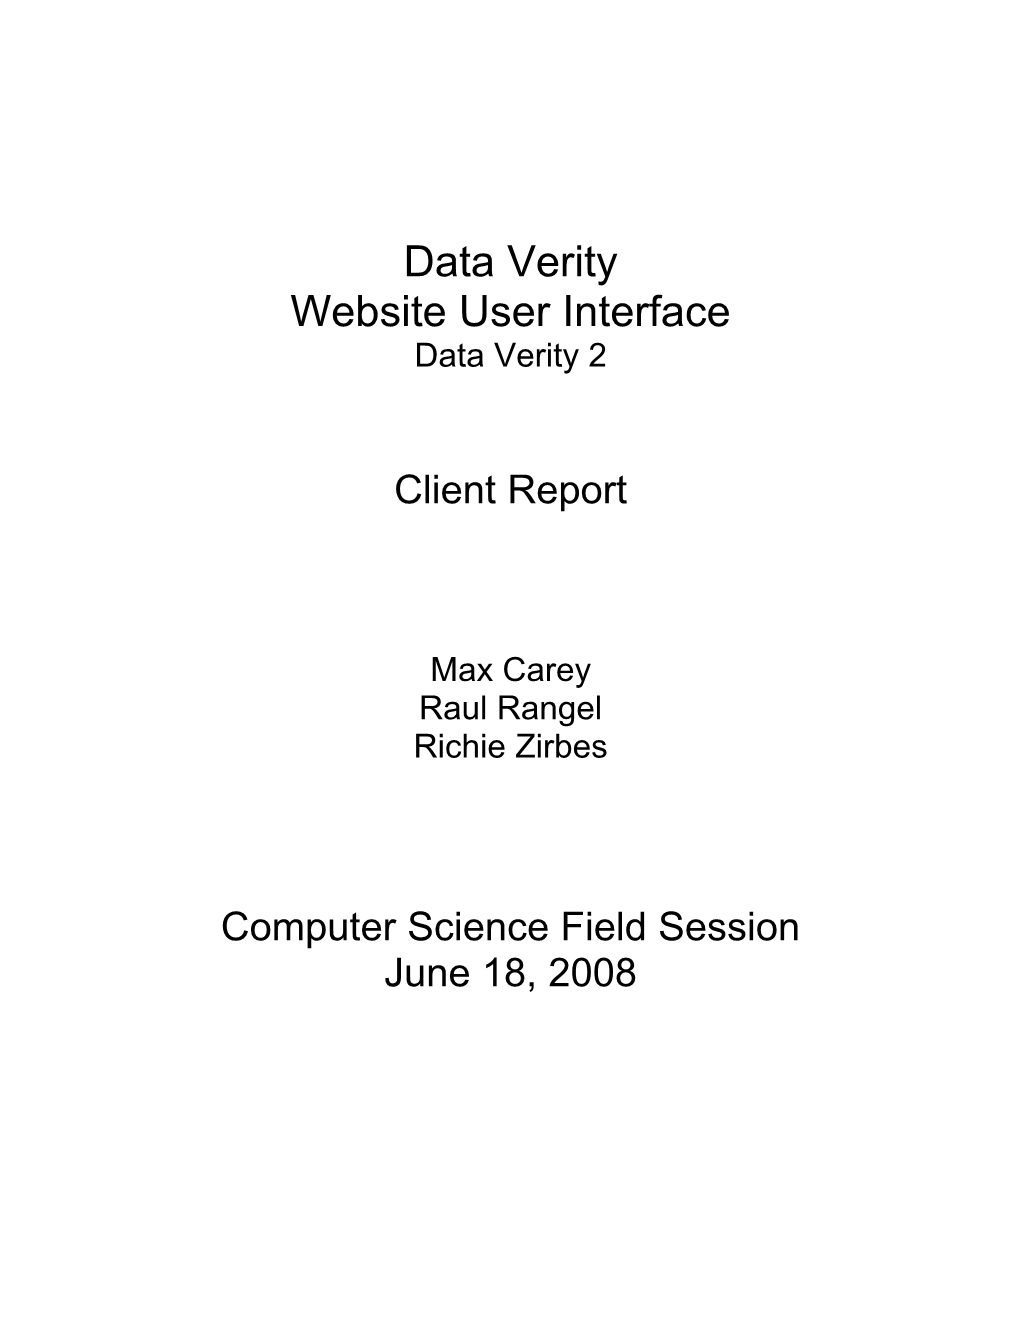 Data Verity Website User Interface Data Verity 2